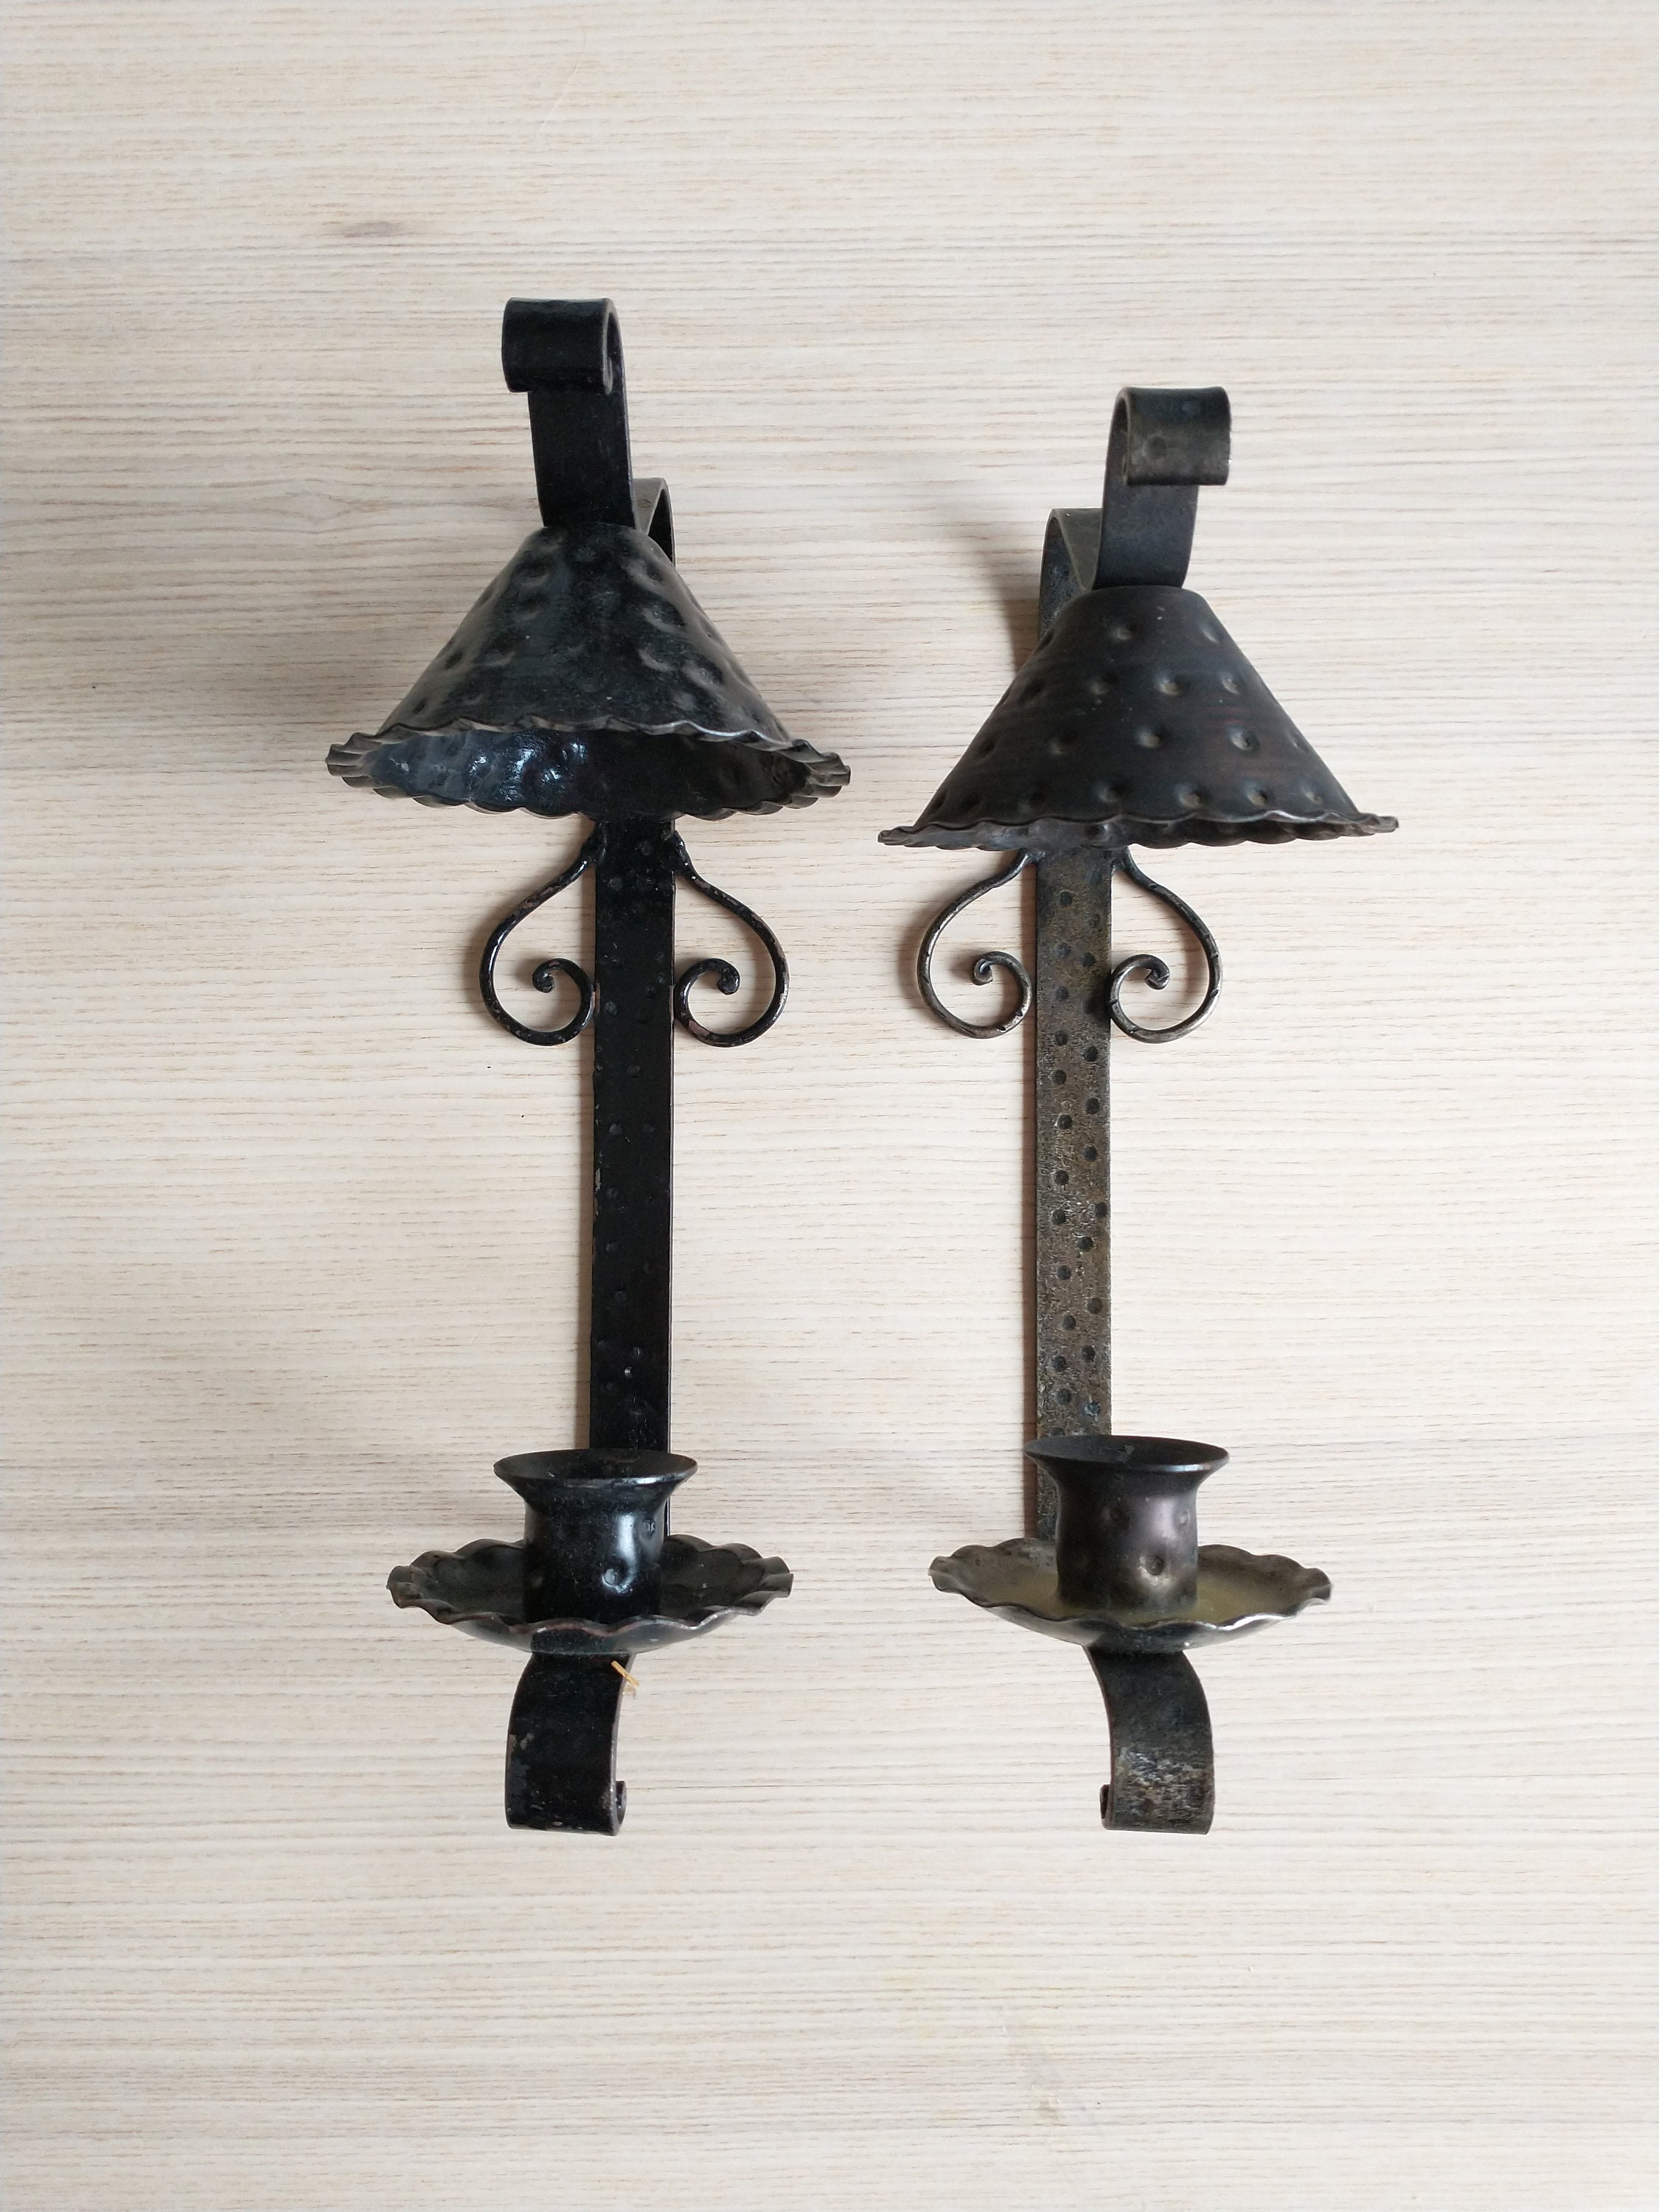 Pair Rustic Primitive Wrought Iron Candle Sconces, Black, Lodge